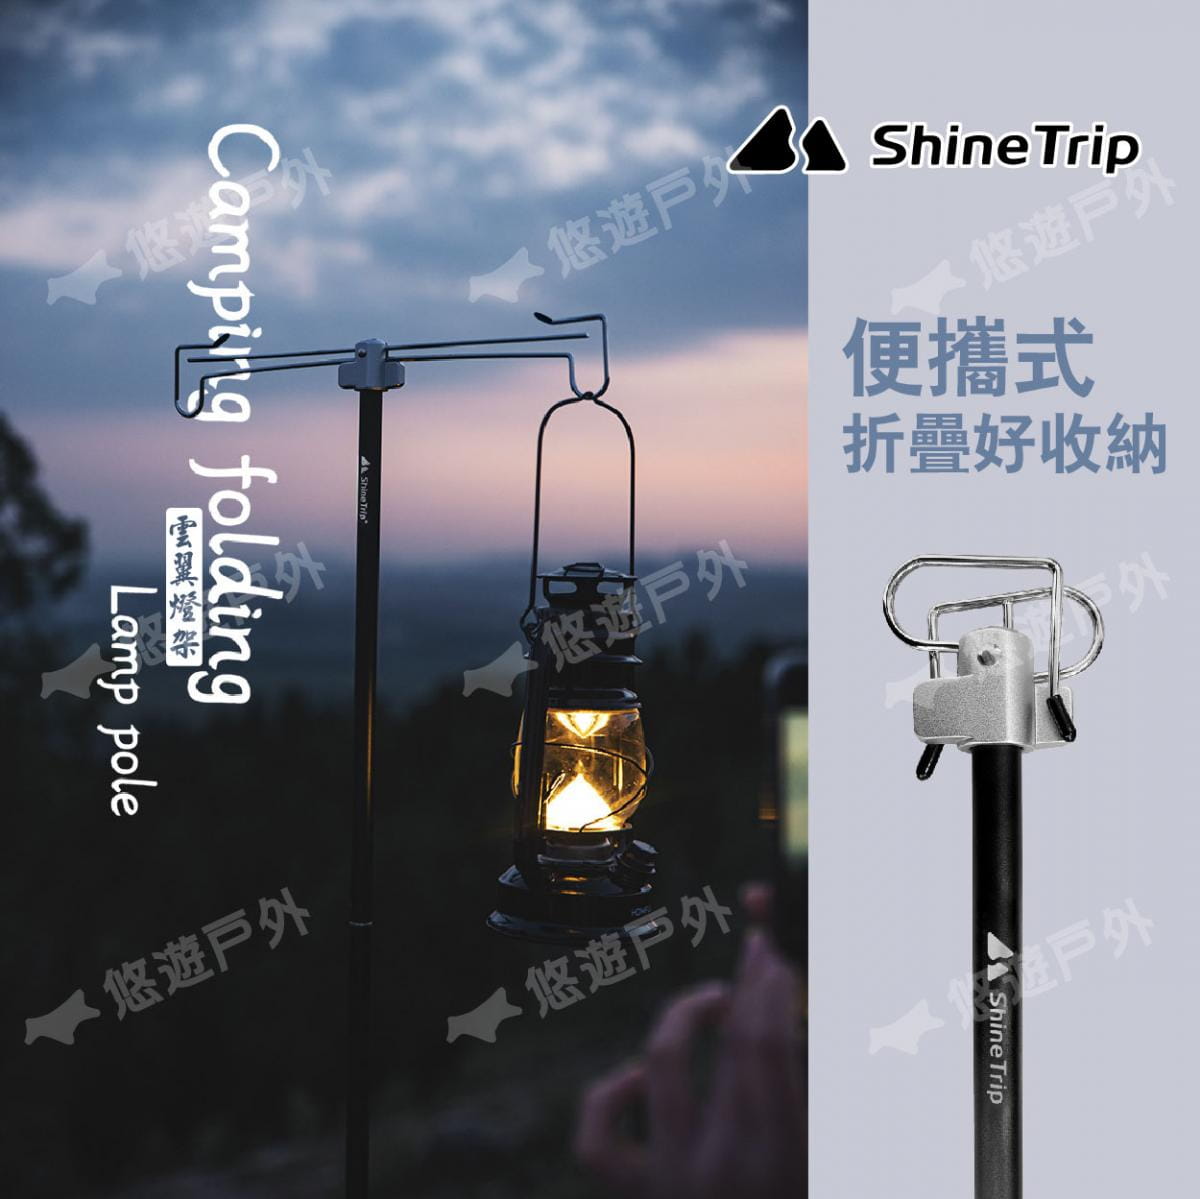 【Shine Trip 山趣】雲翼燈架套裝 16mm燈架 悠遊戶外 2